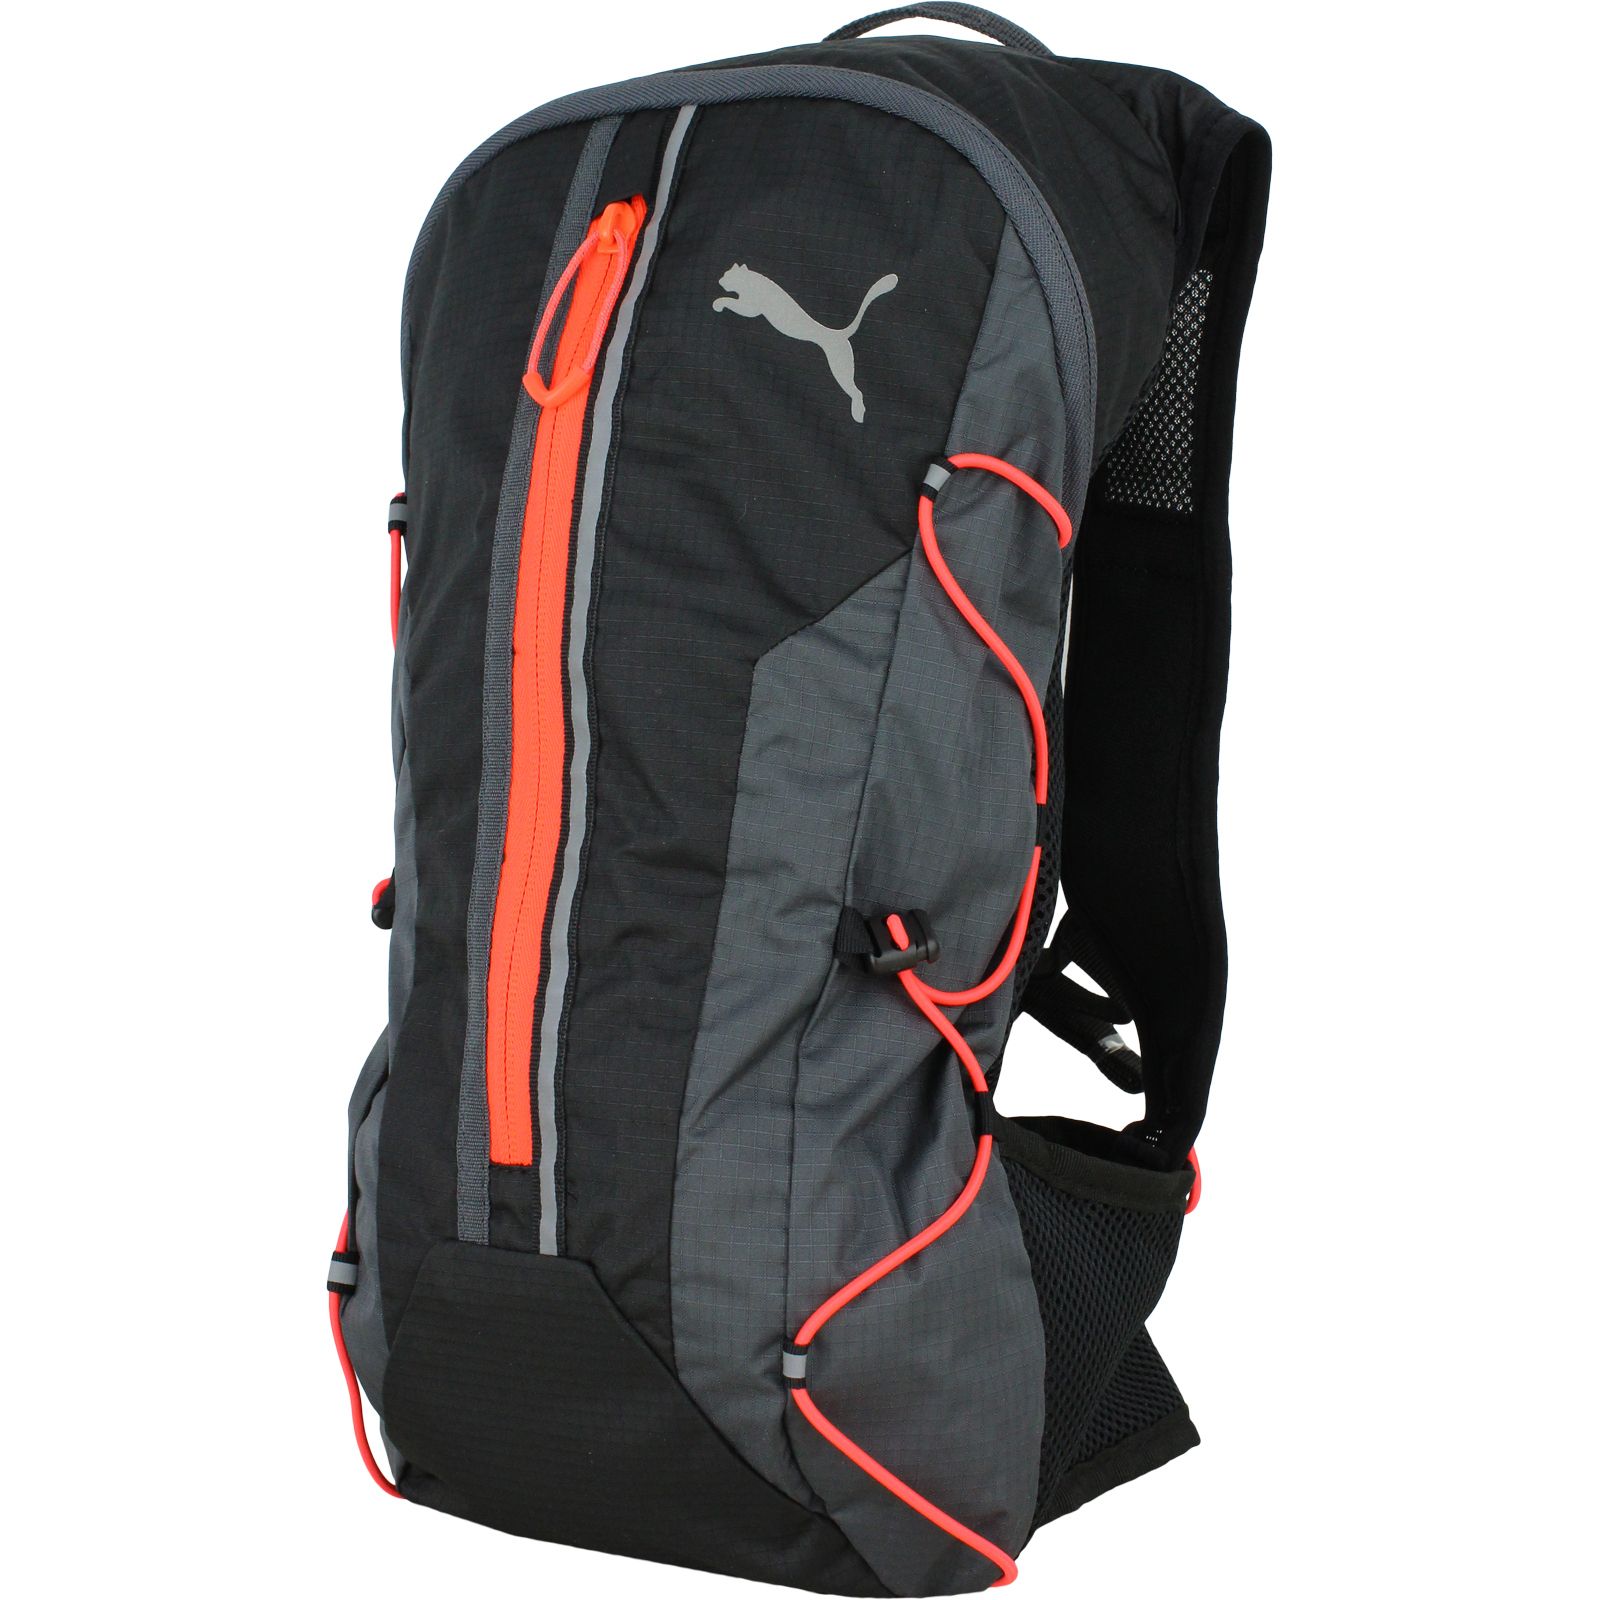 puma lightweight backpack